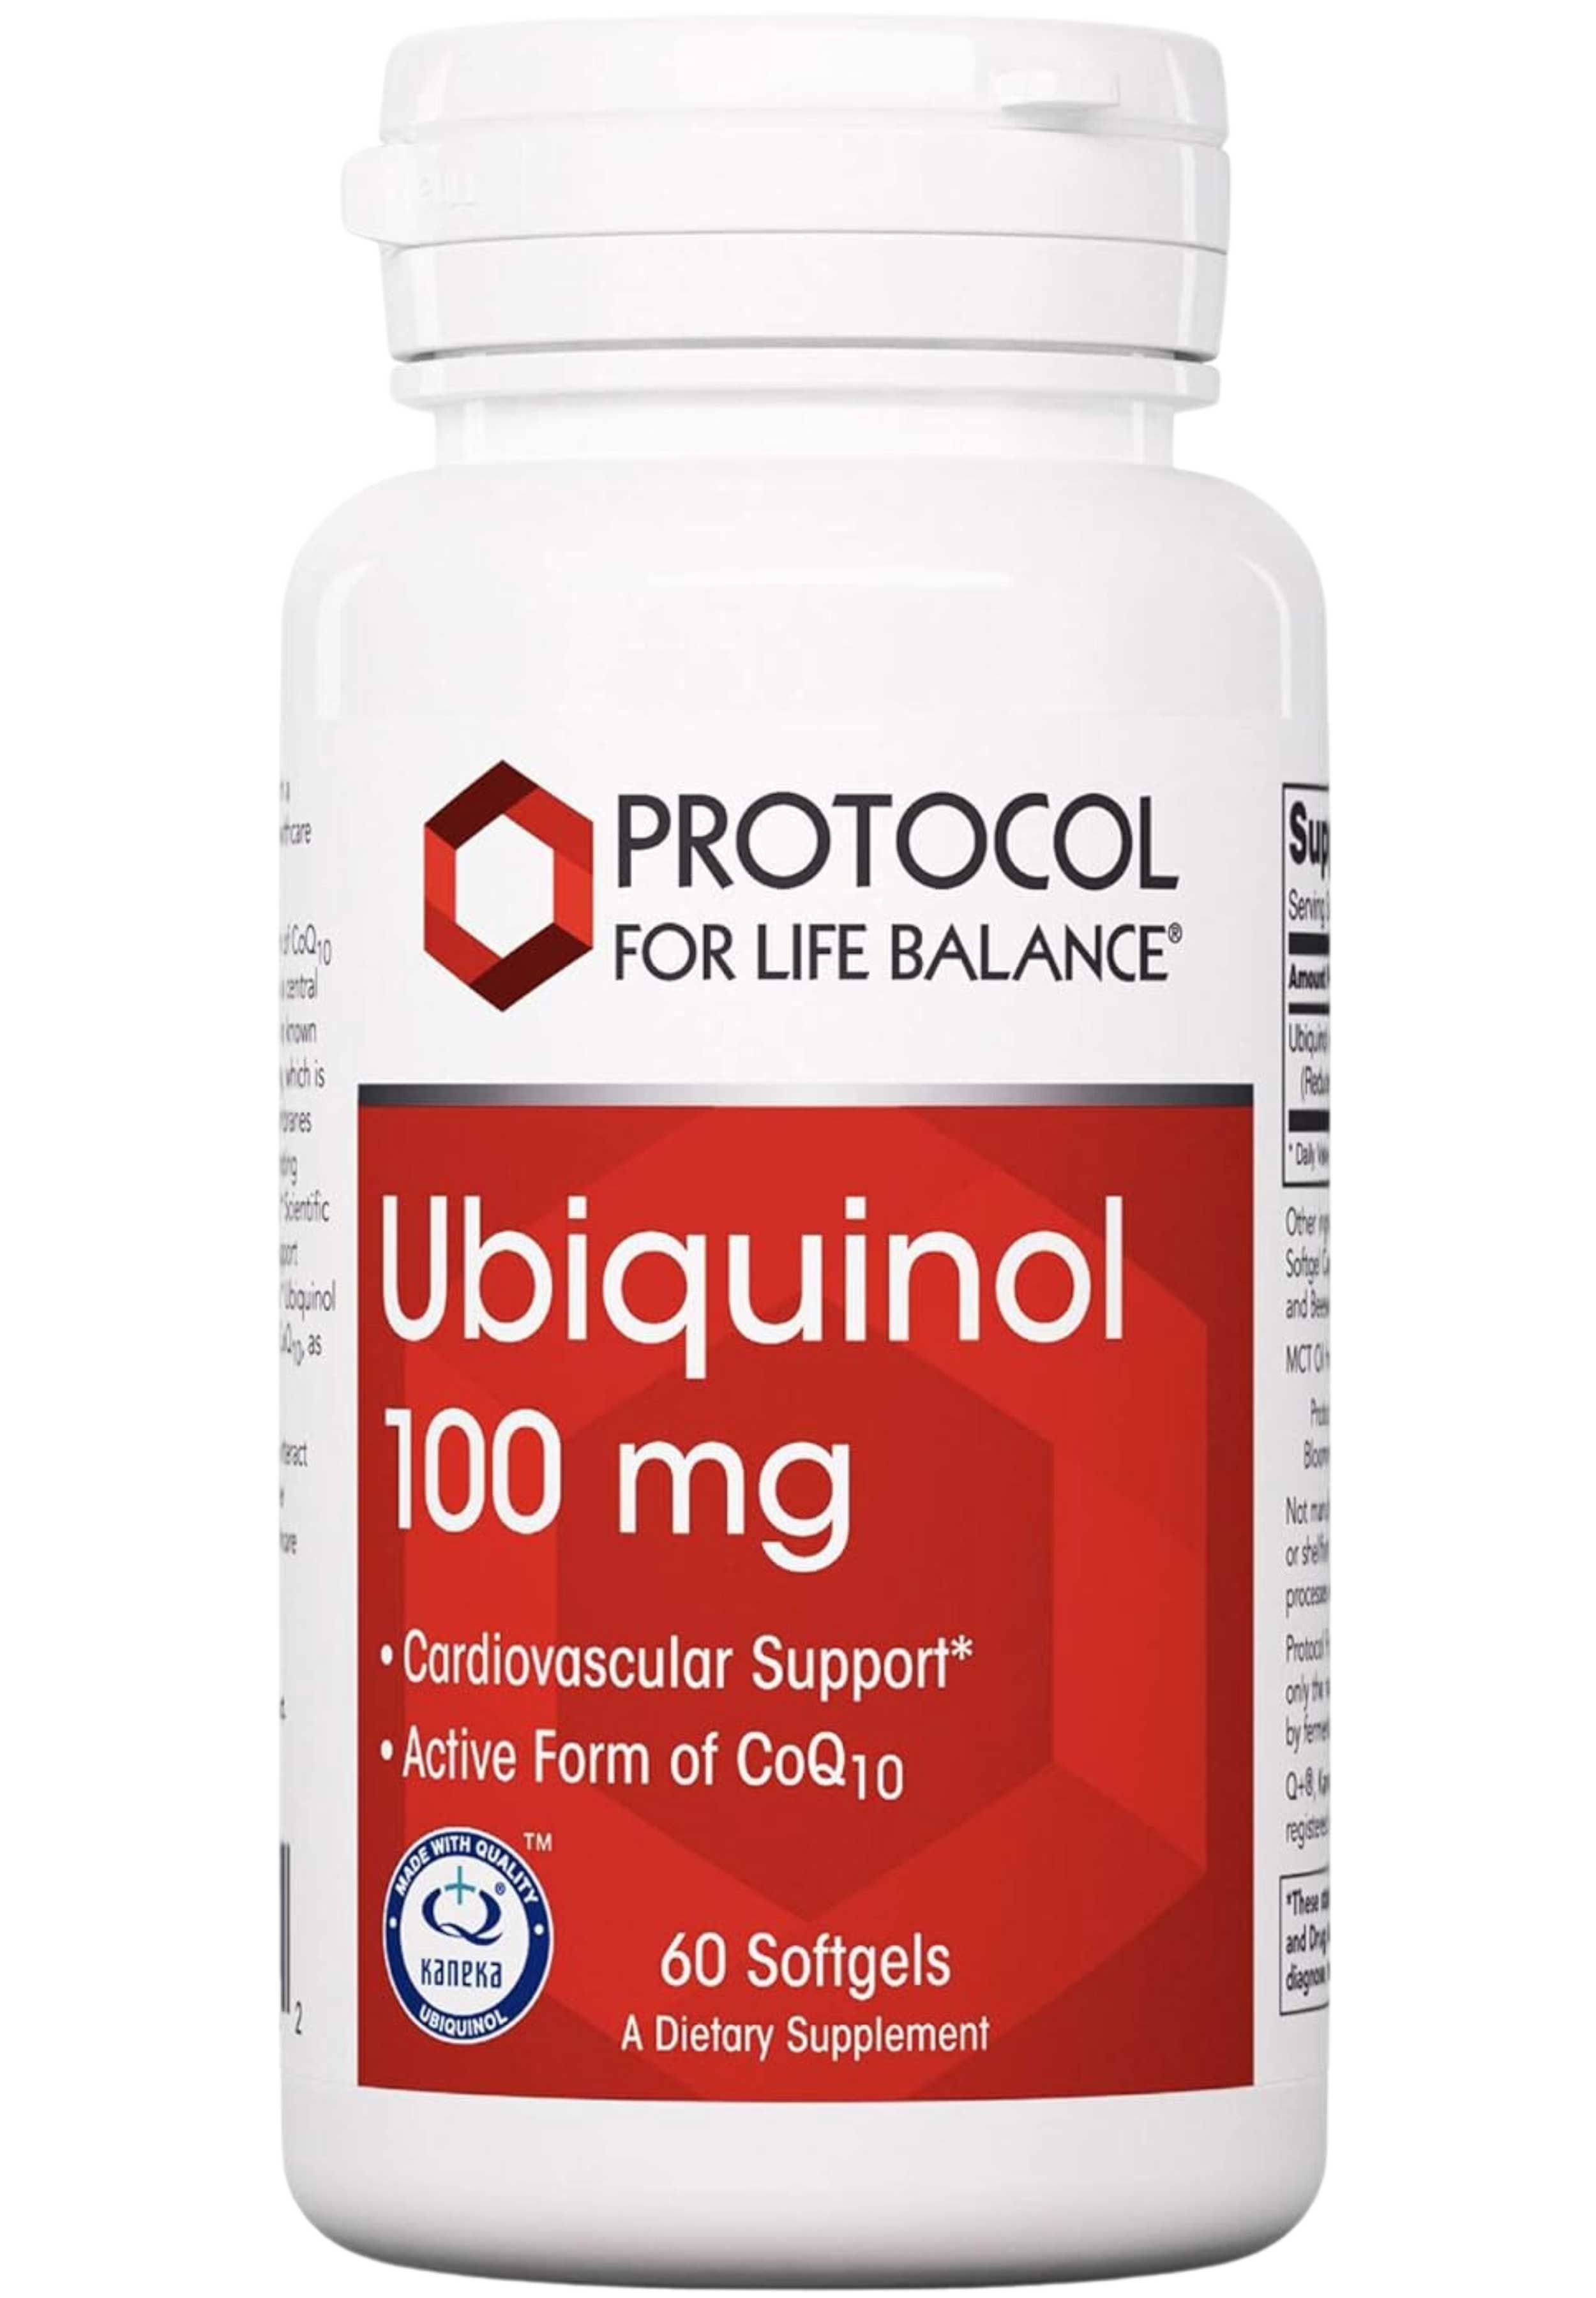 Protocol for Life Balance Ubiquinol